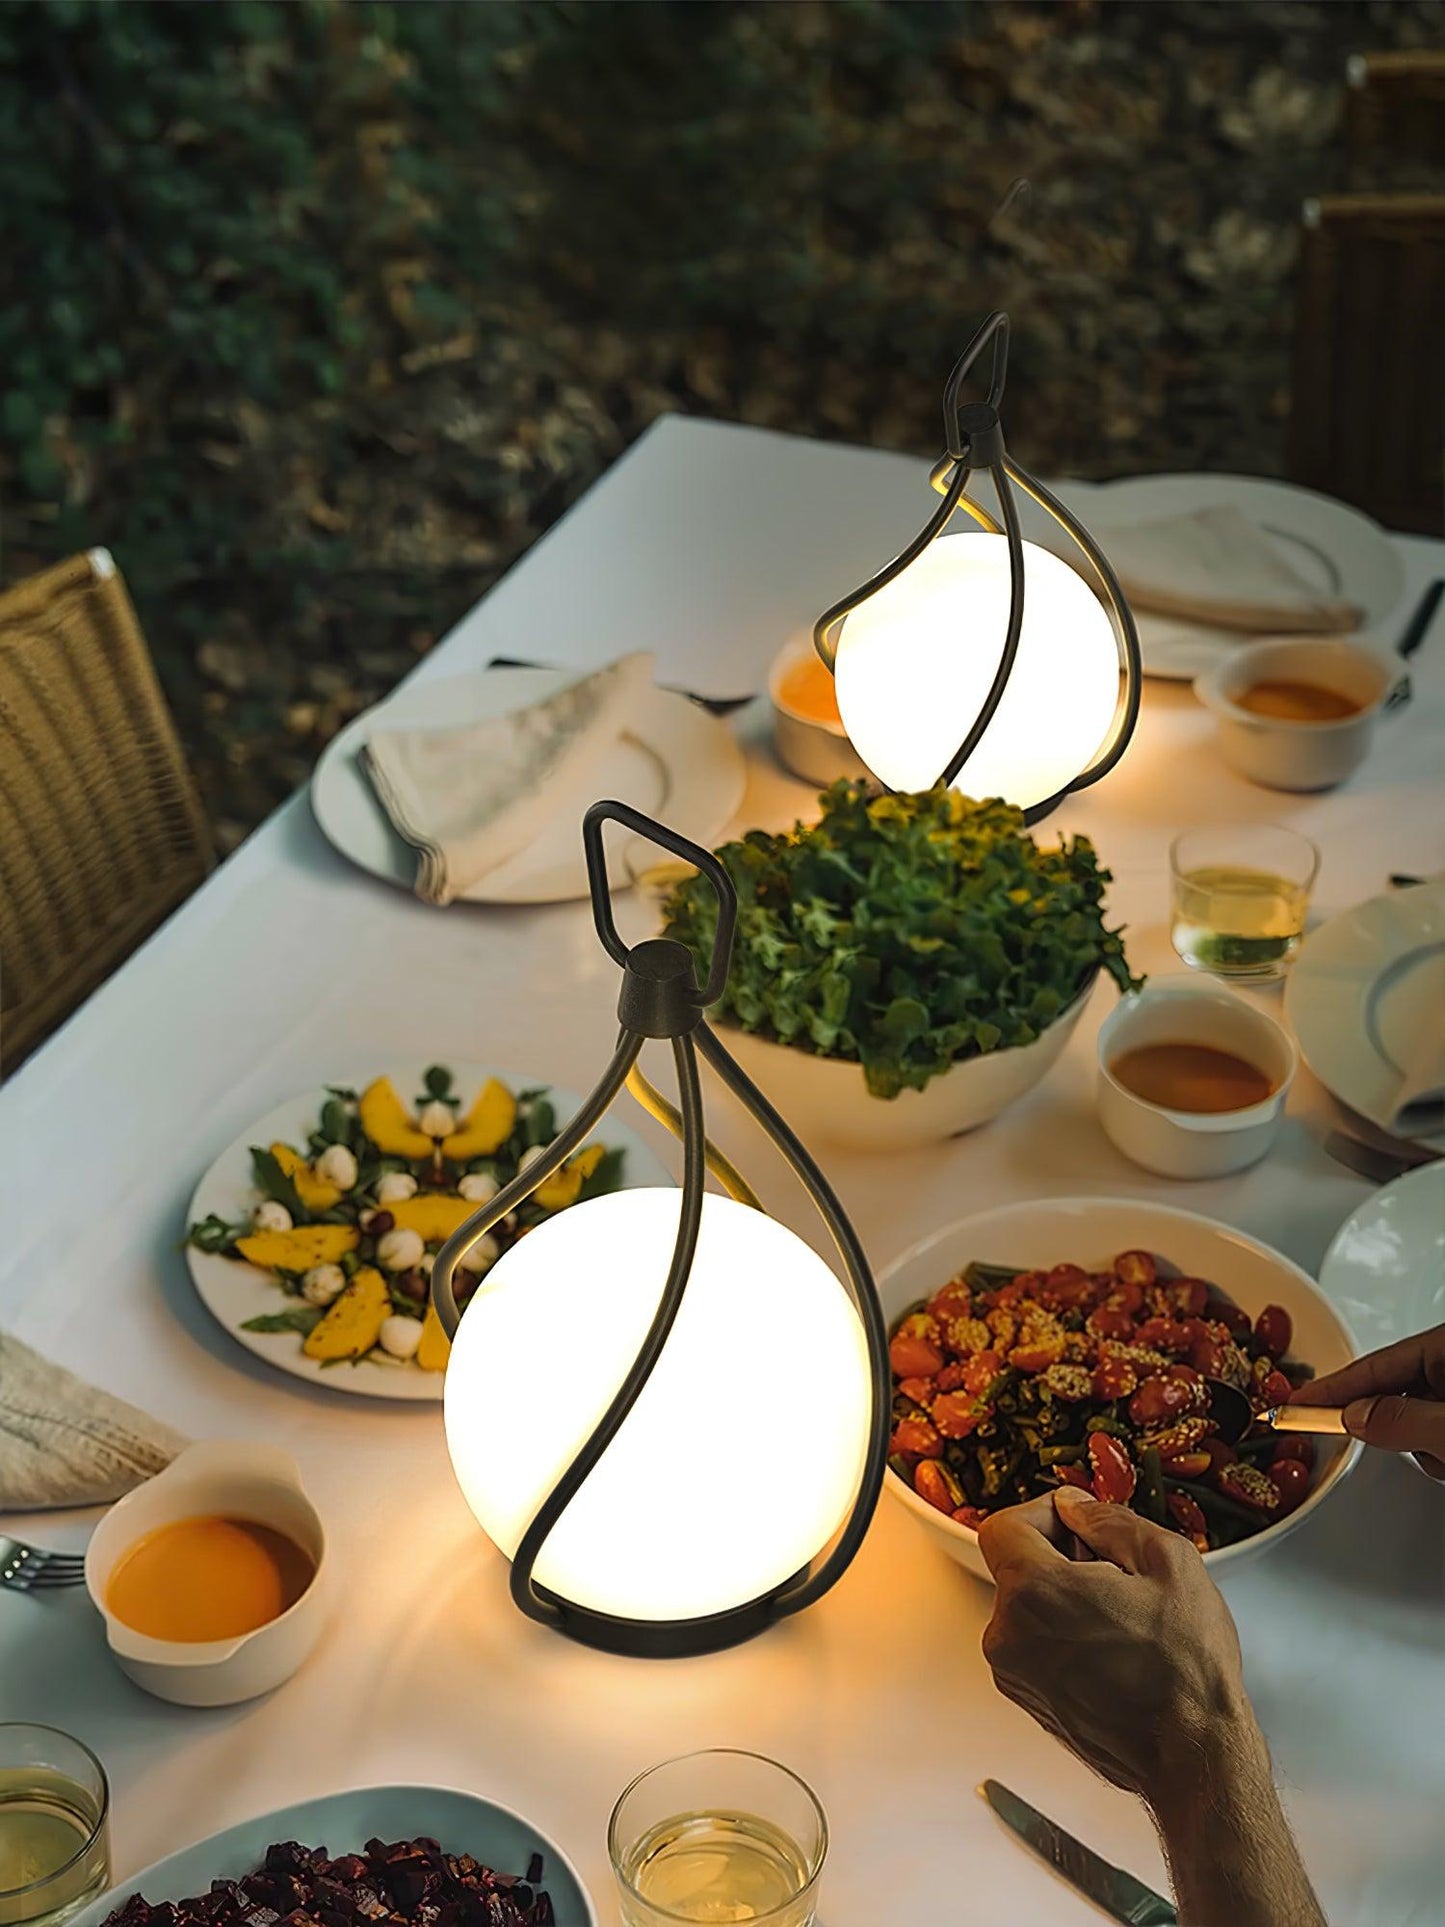 Eclisse Orb Lantern مصباح طاولة قابل لإعادة الشحن